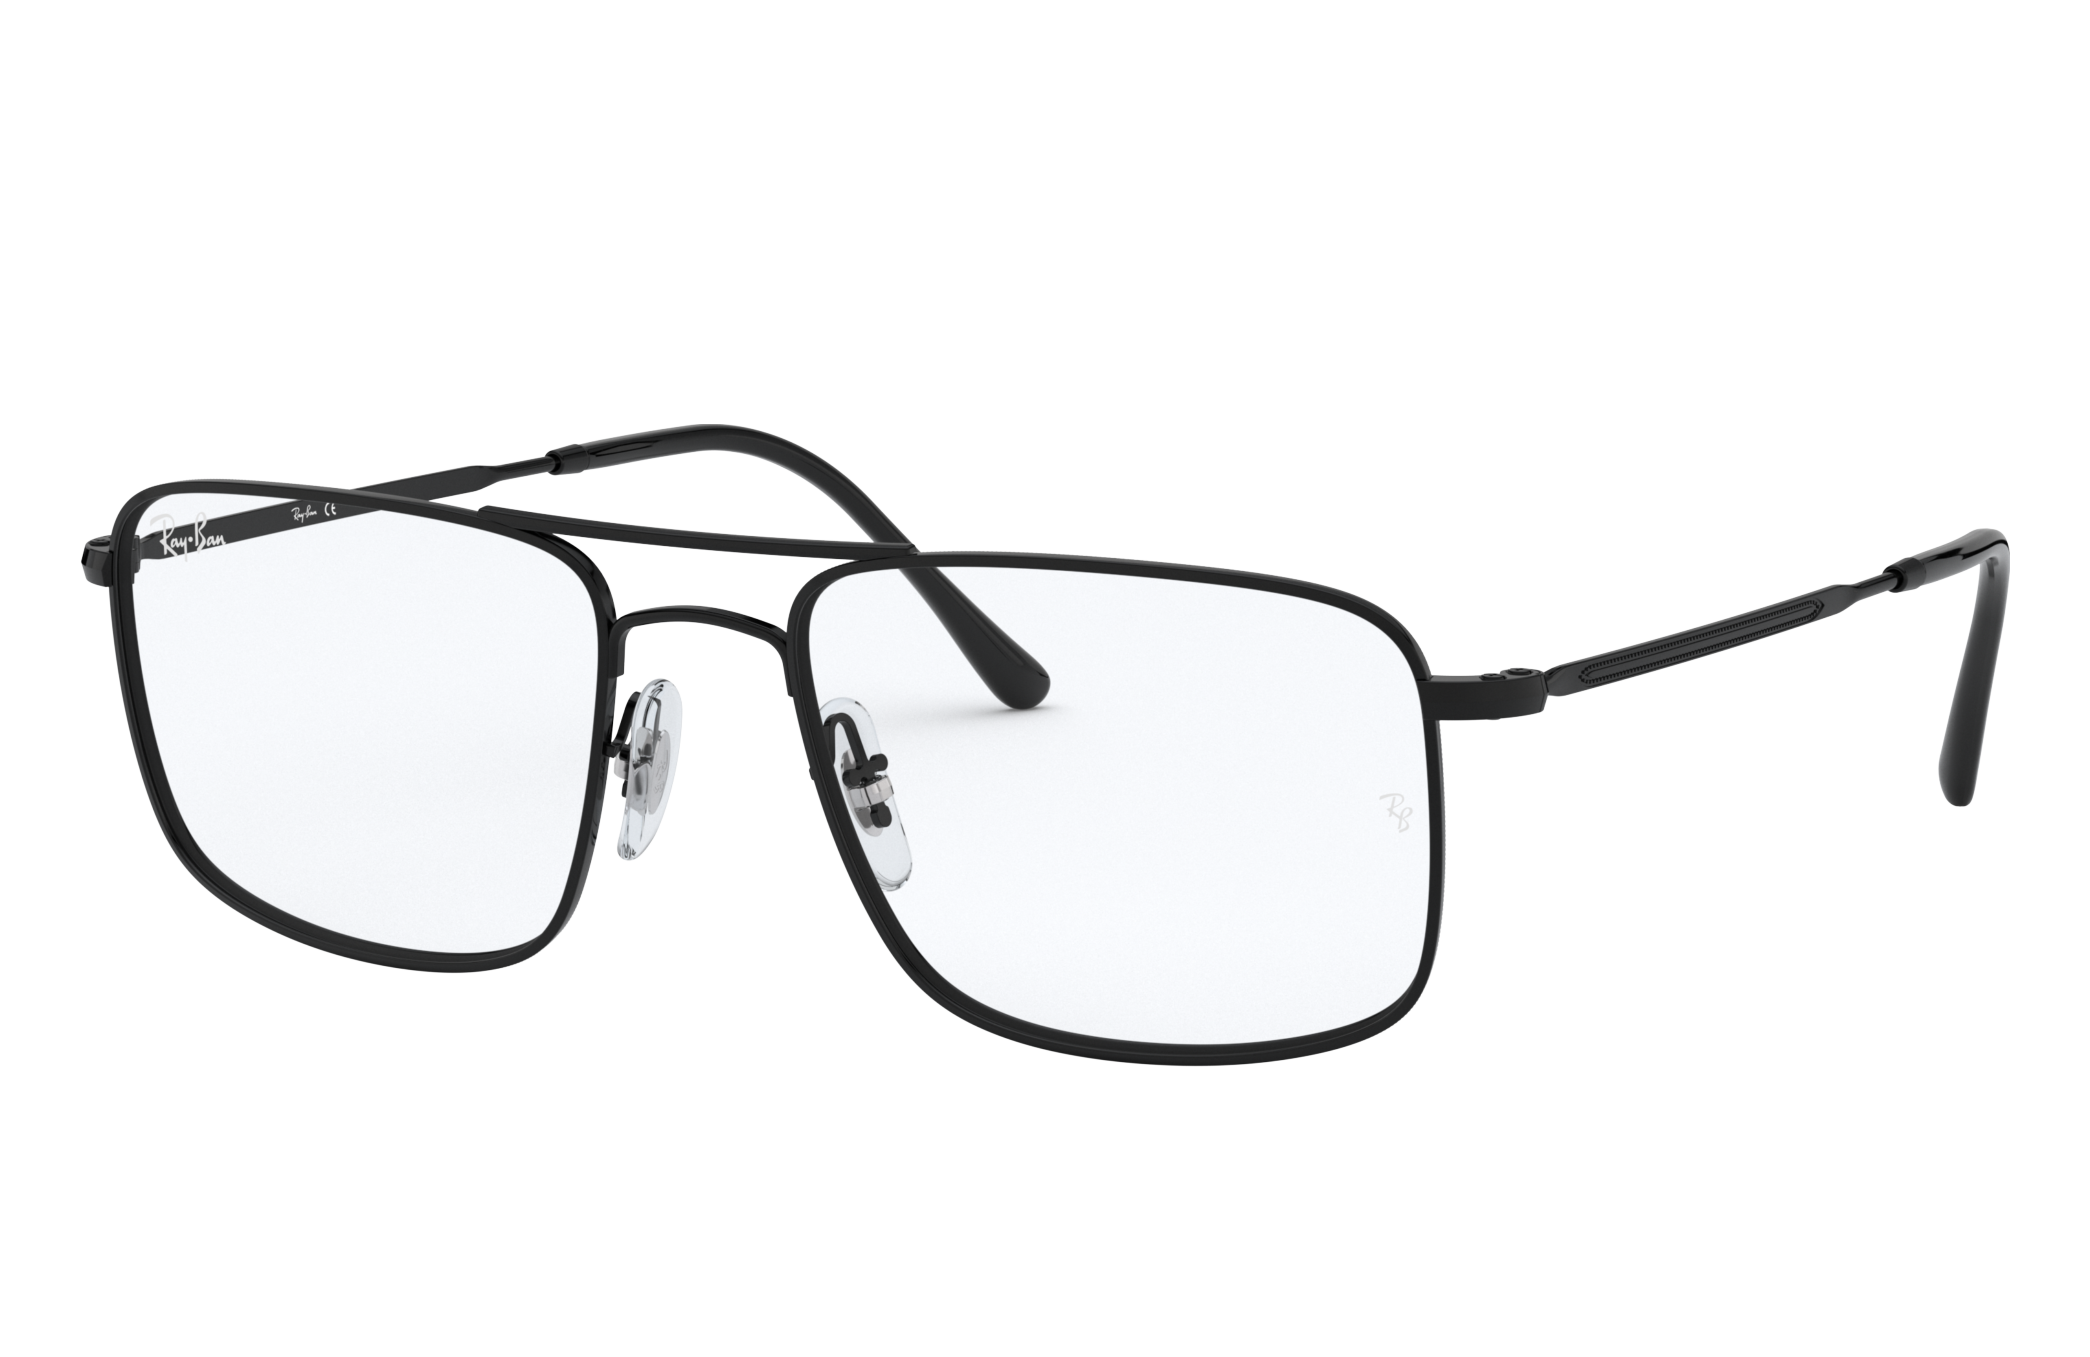 Rb6434 Optics Eyeglasses with Black Frame - RB6434 | Ray-Ban® US